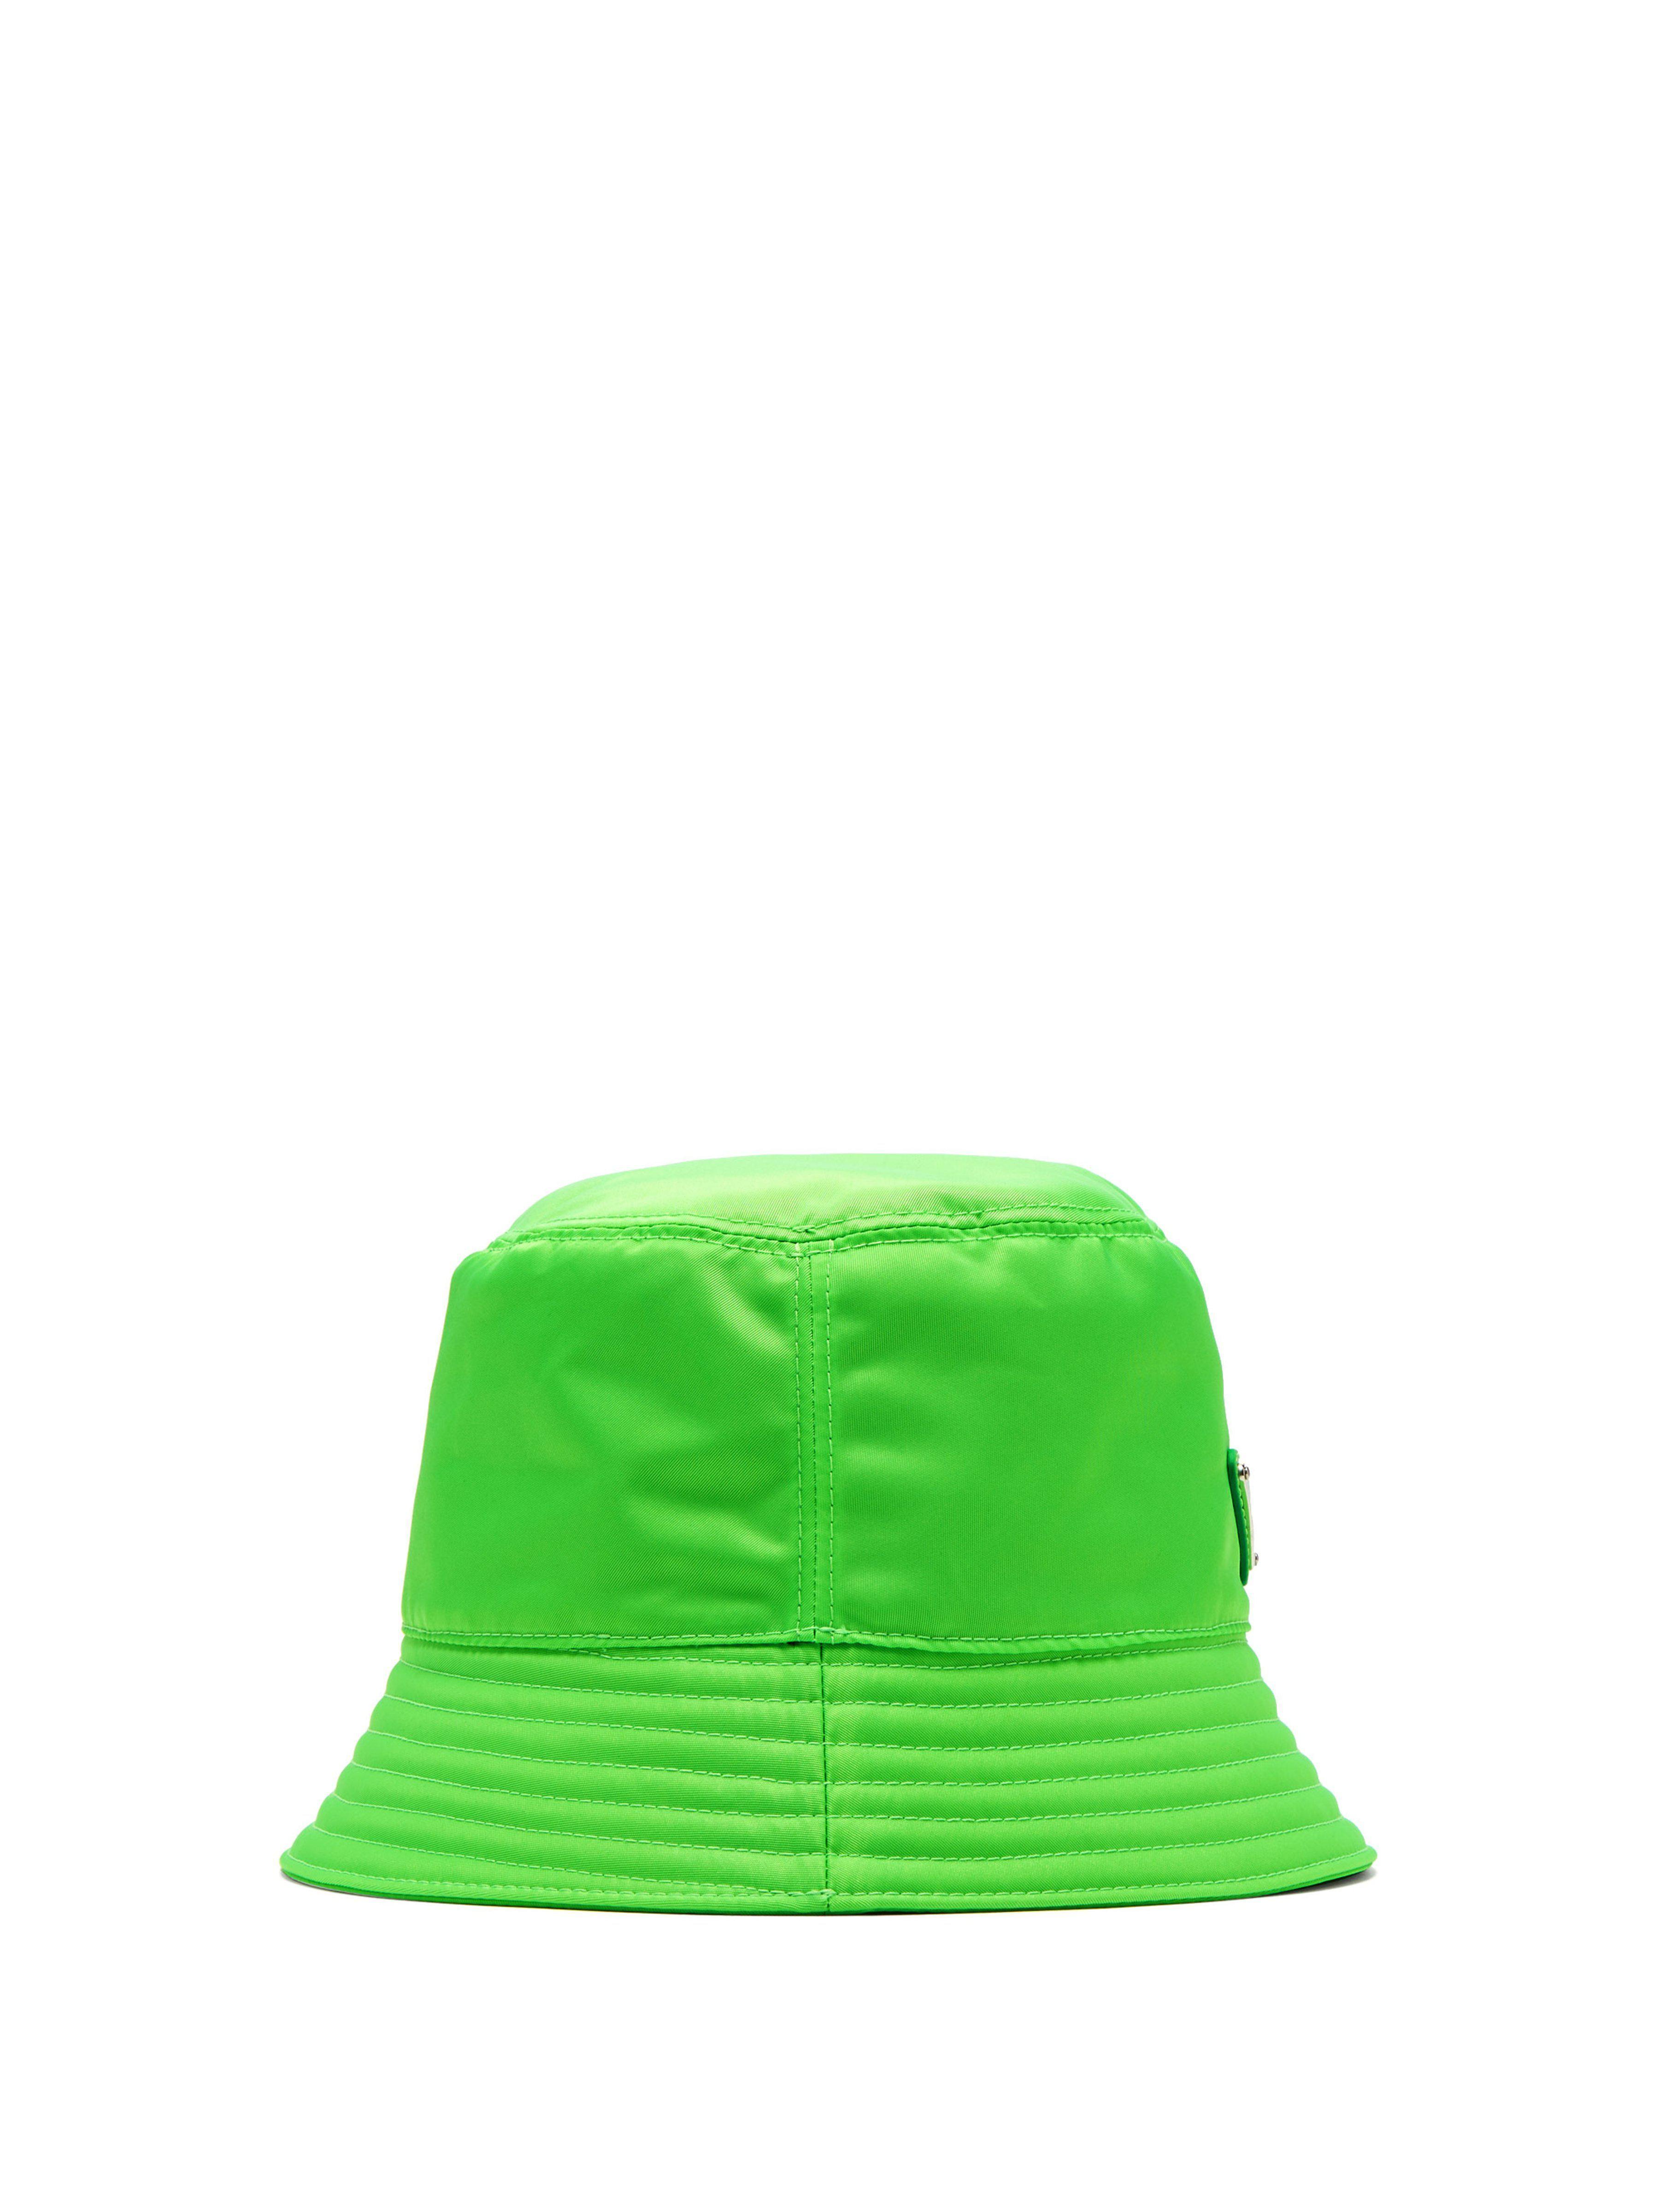 Green Triangle Logo - Prada Triangle Logo Bucket Hat in Green for Men